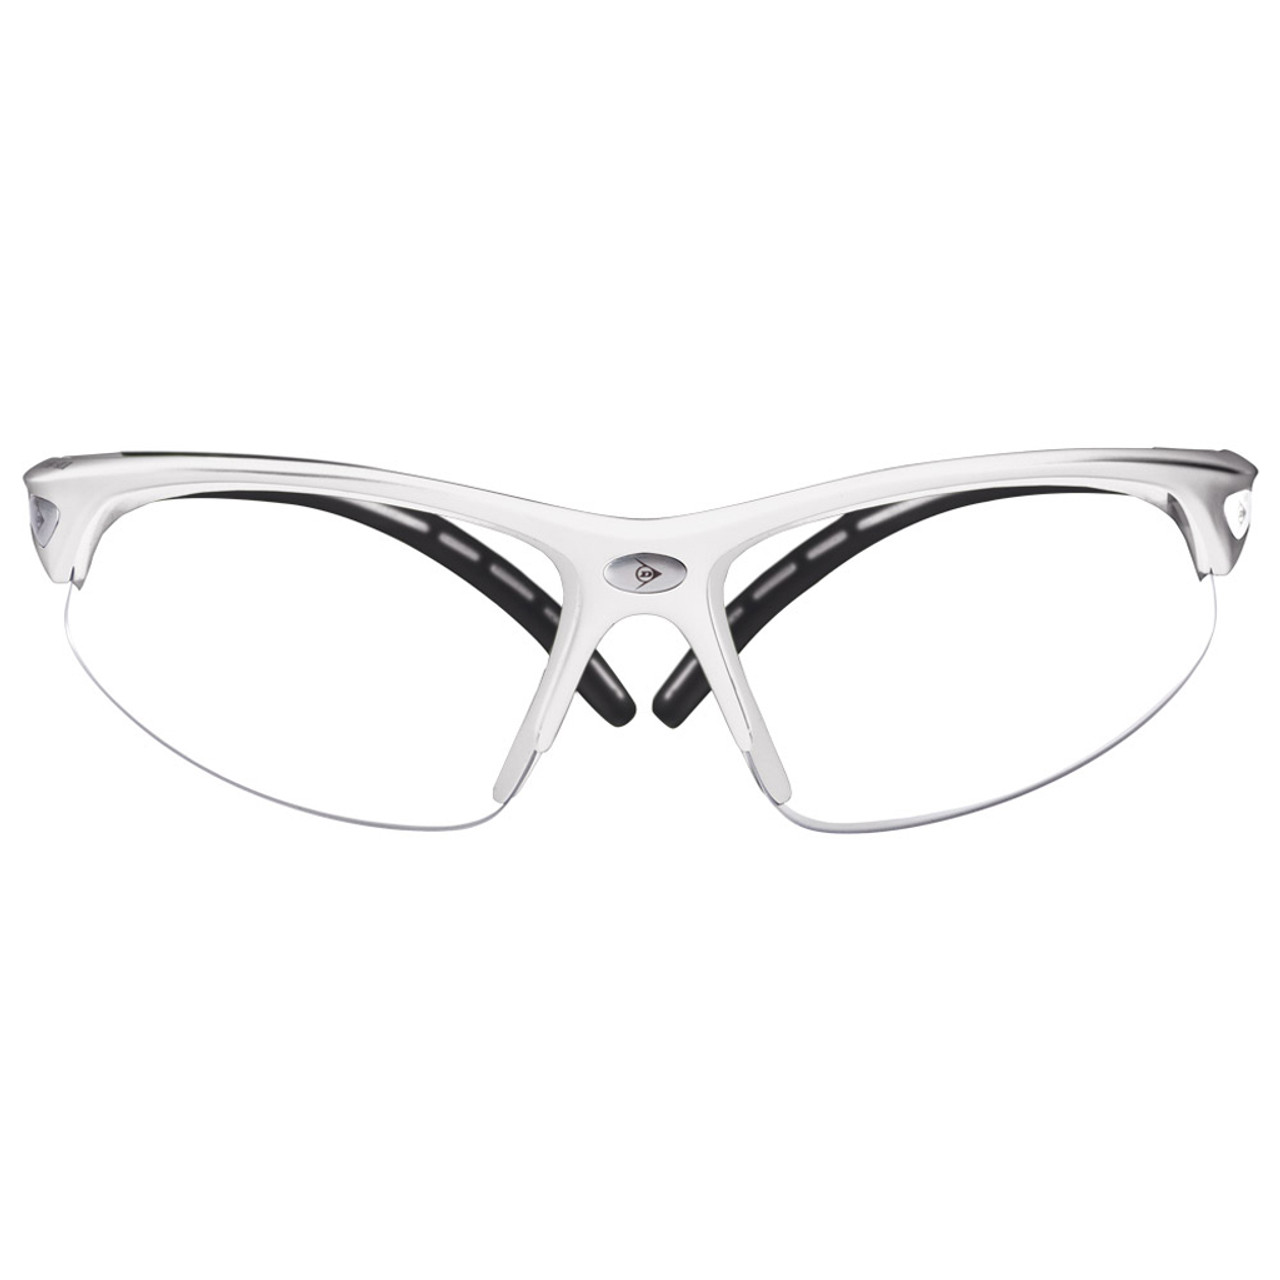 Dunlop I-Armor Squash Eye Protection Glasses Goggles Eyewear • Dapto Squash